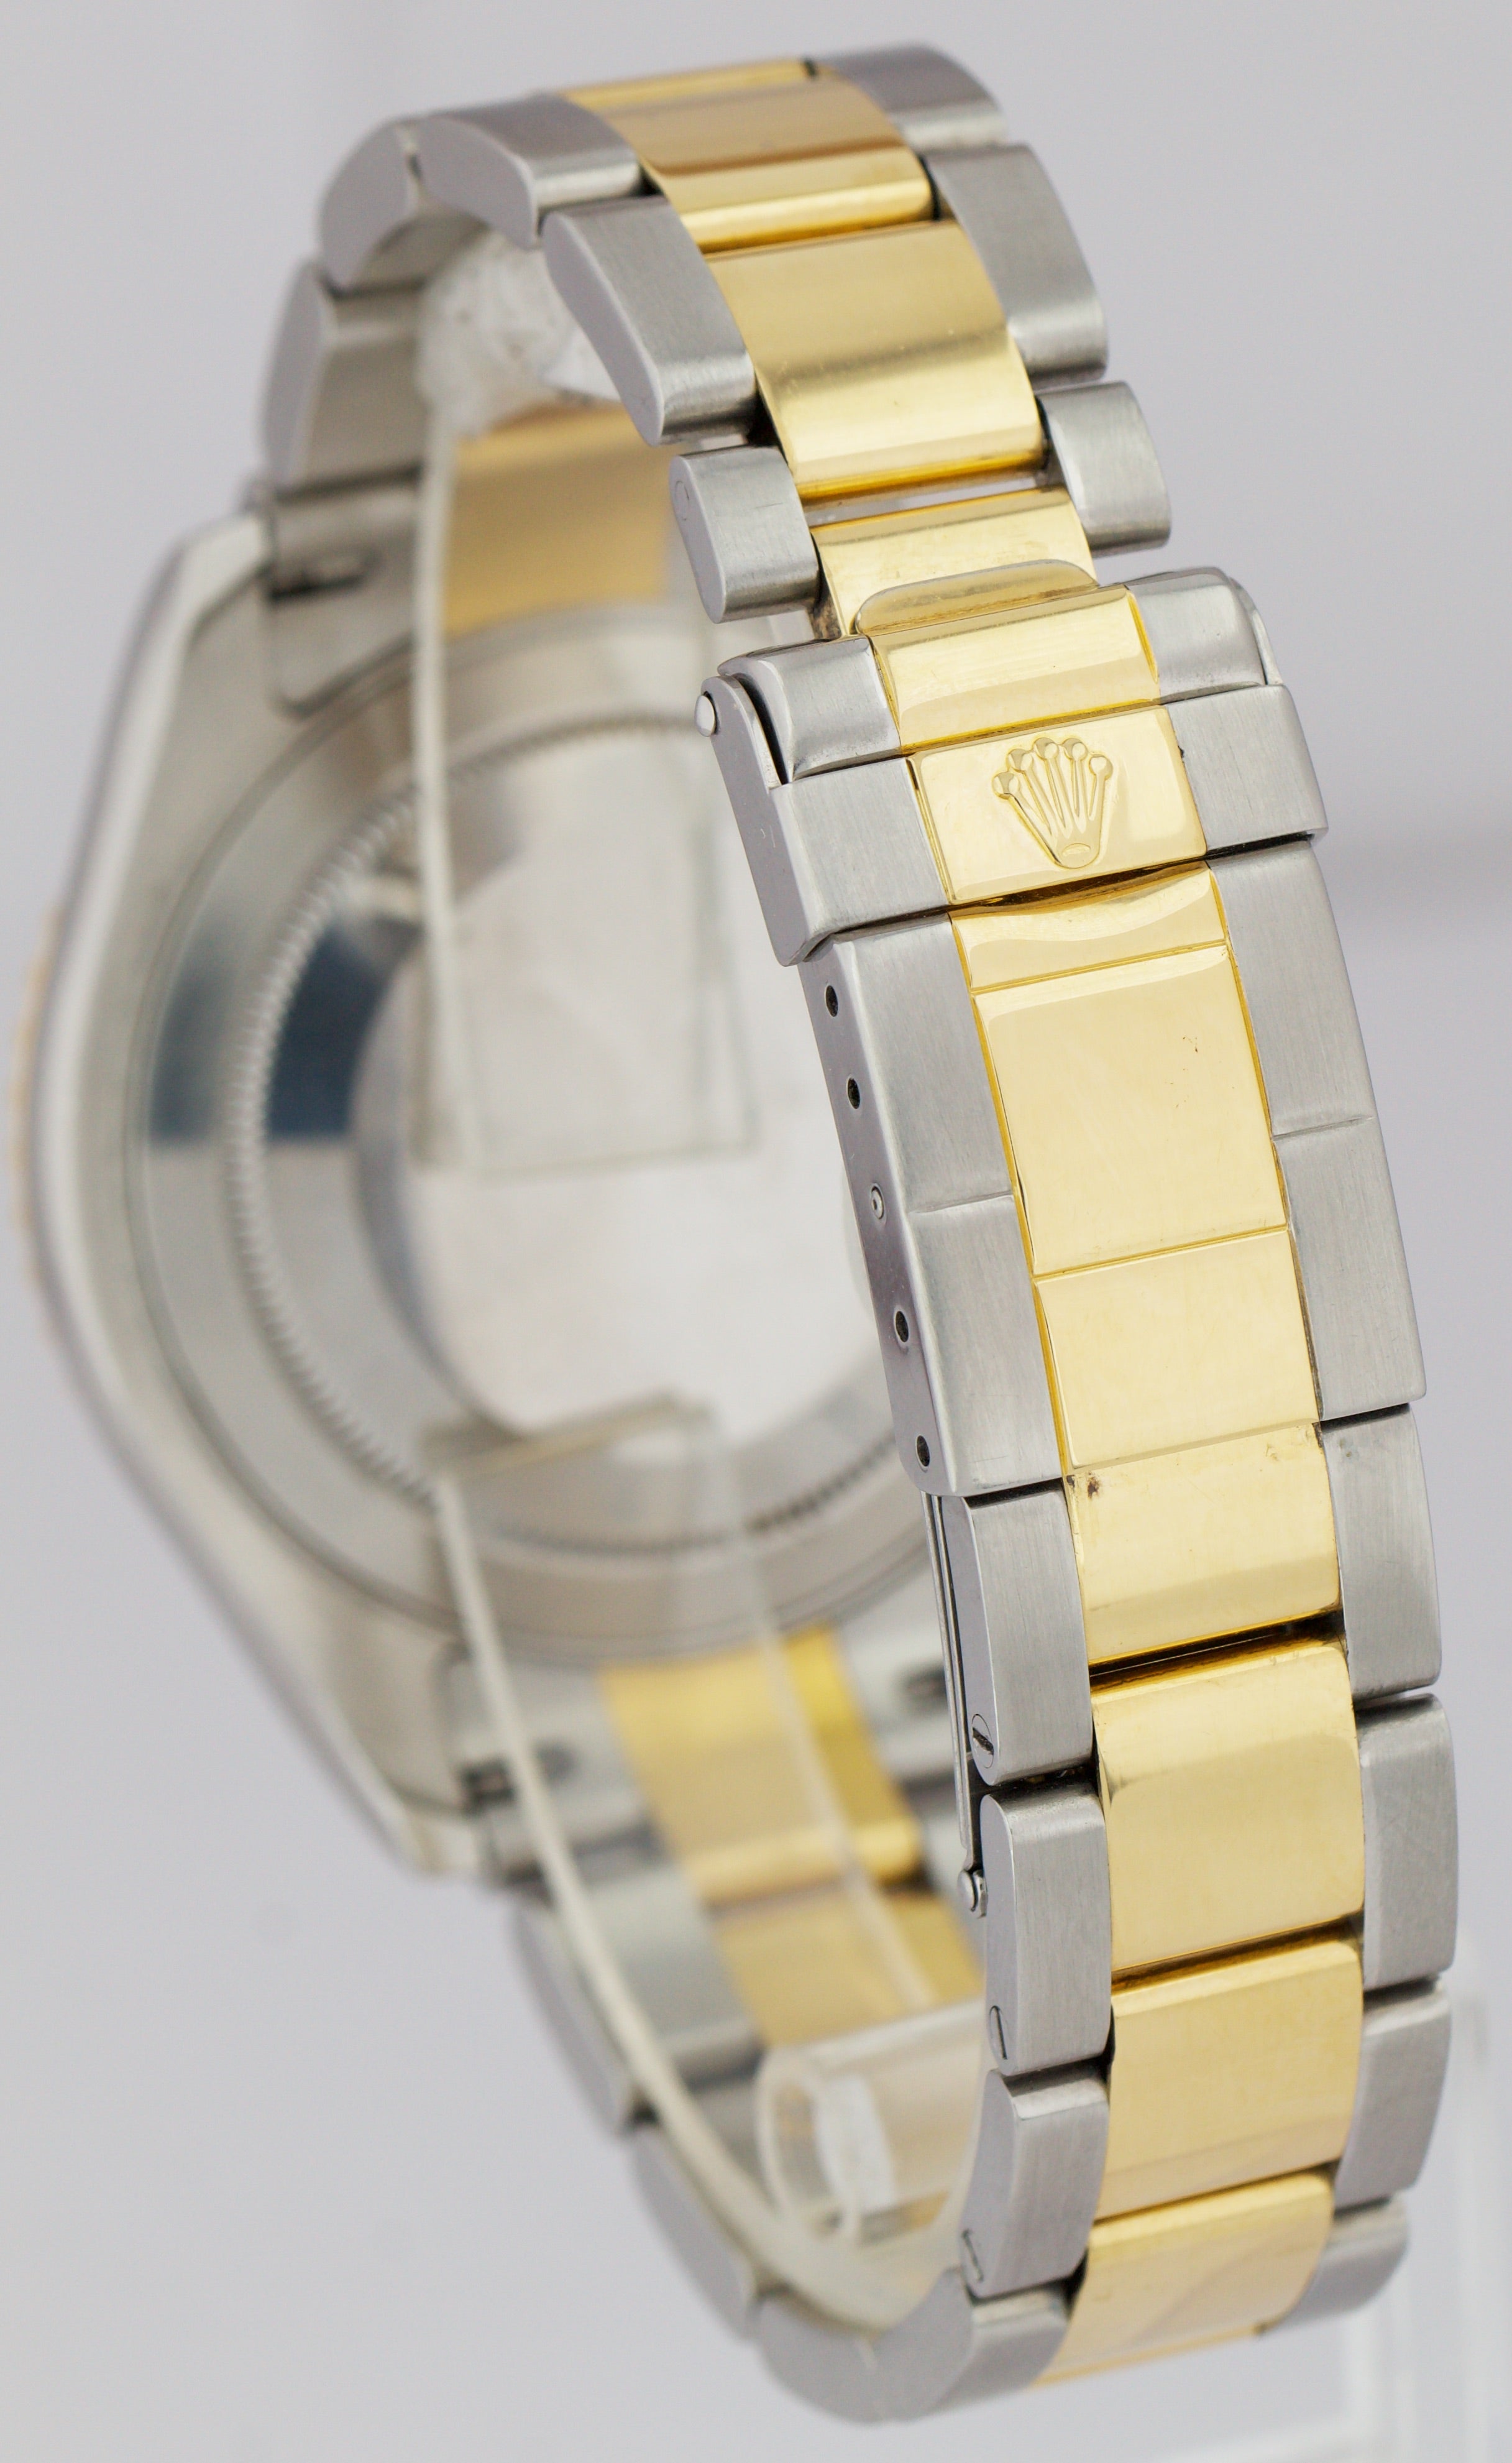 REHAUT MINT Rolex Yacht-Master 40mm 18K Two-Tone Steel Gold White Watch 16623